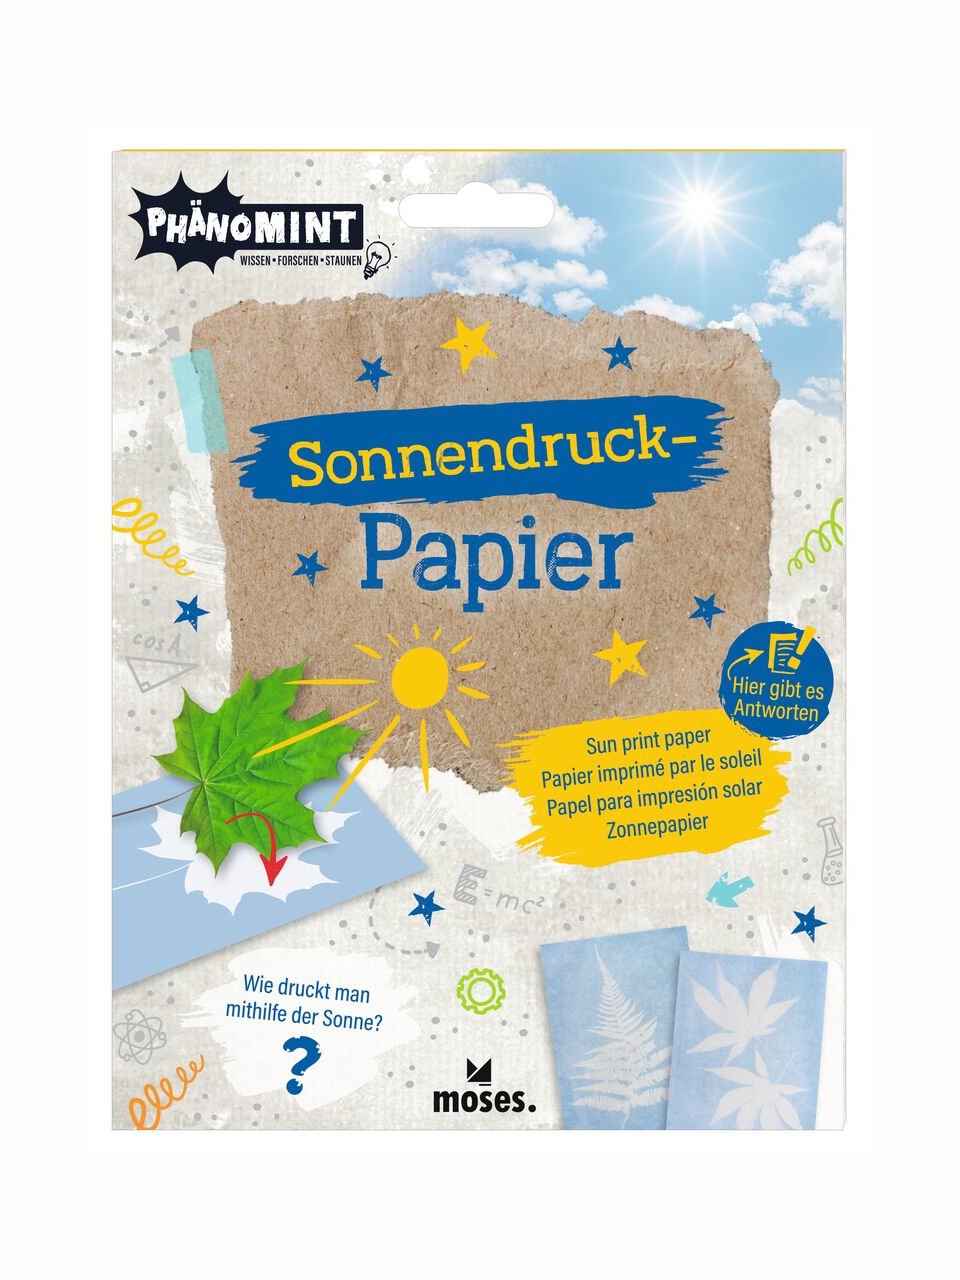 Sonnendruck-Papier